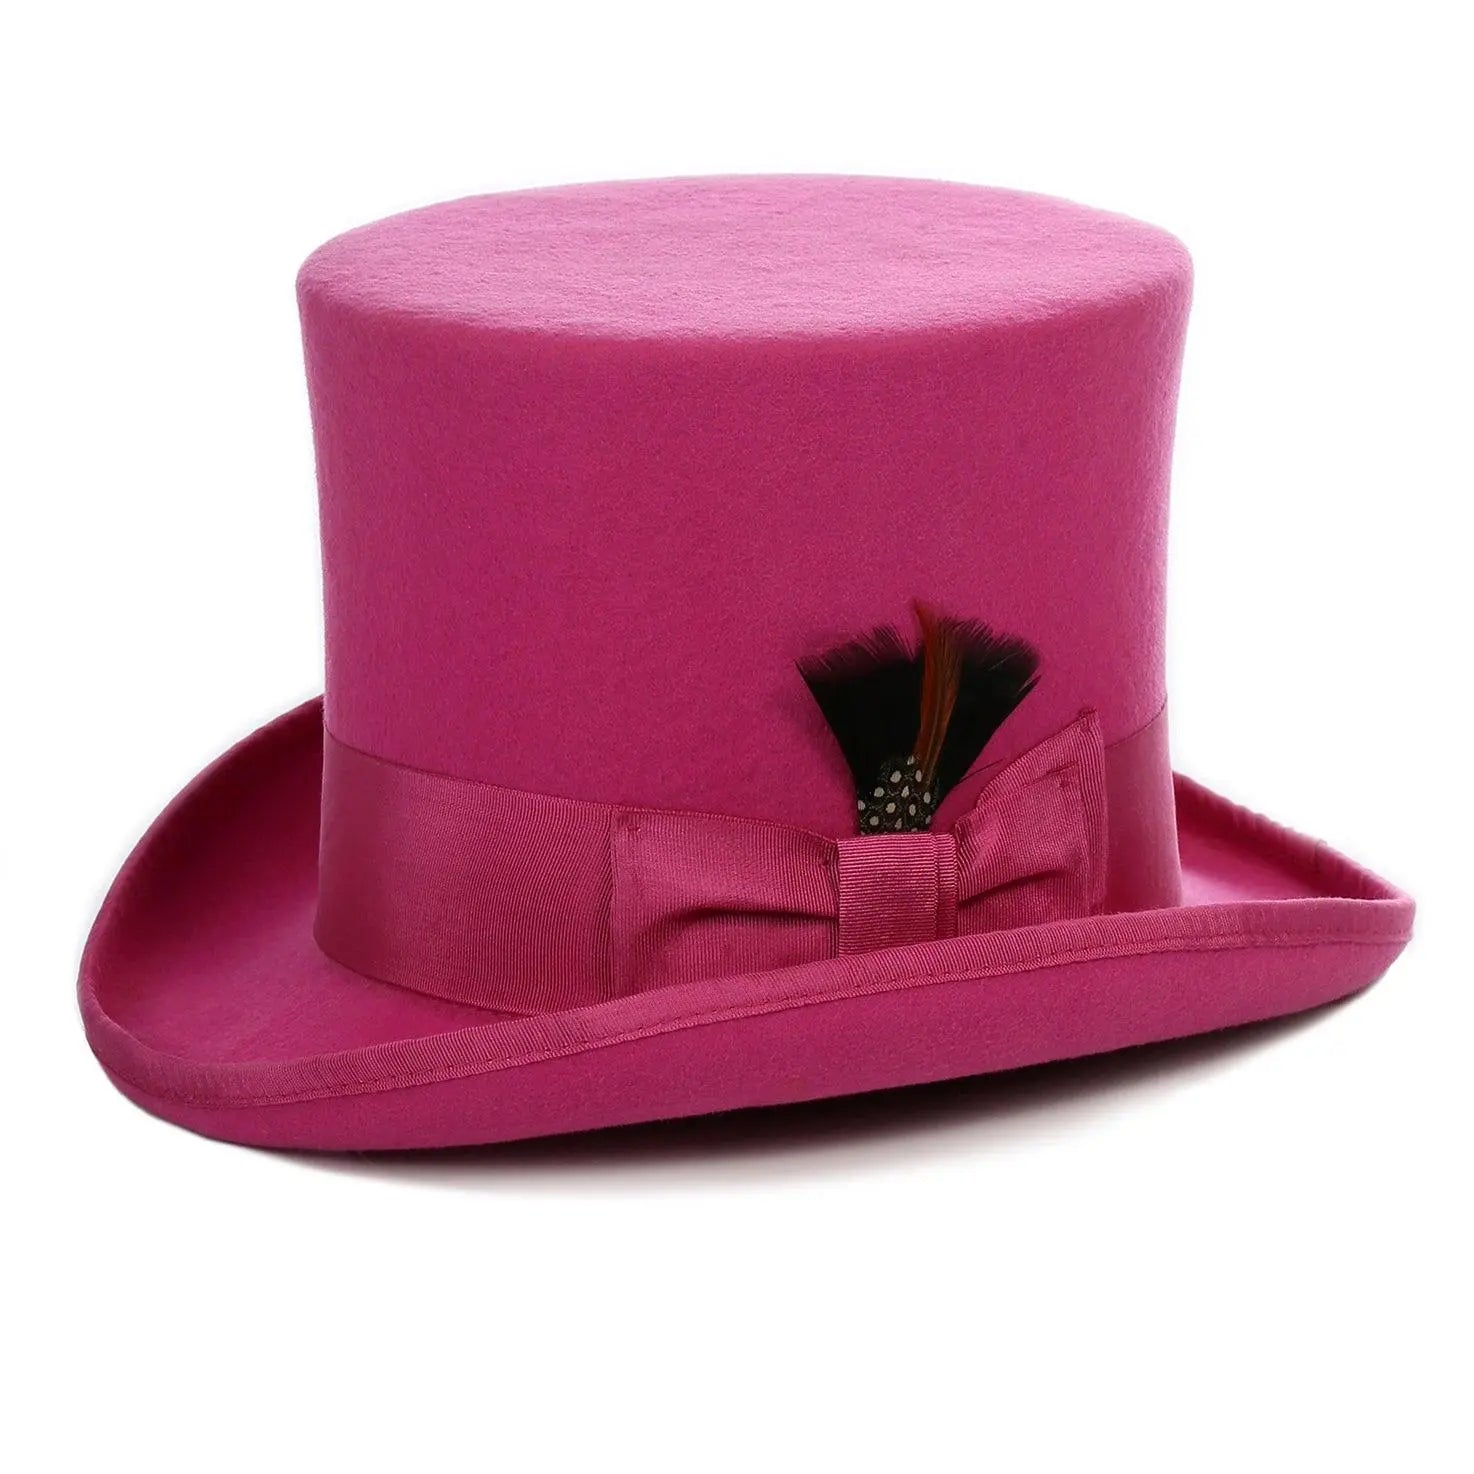 Ferrecci Premium Top Hat in Fuchsia Wool Victorian Elegance